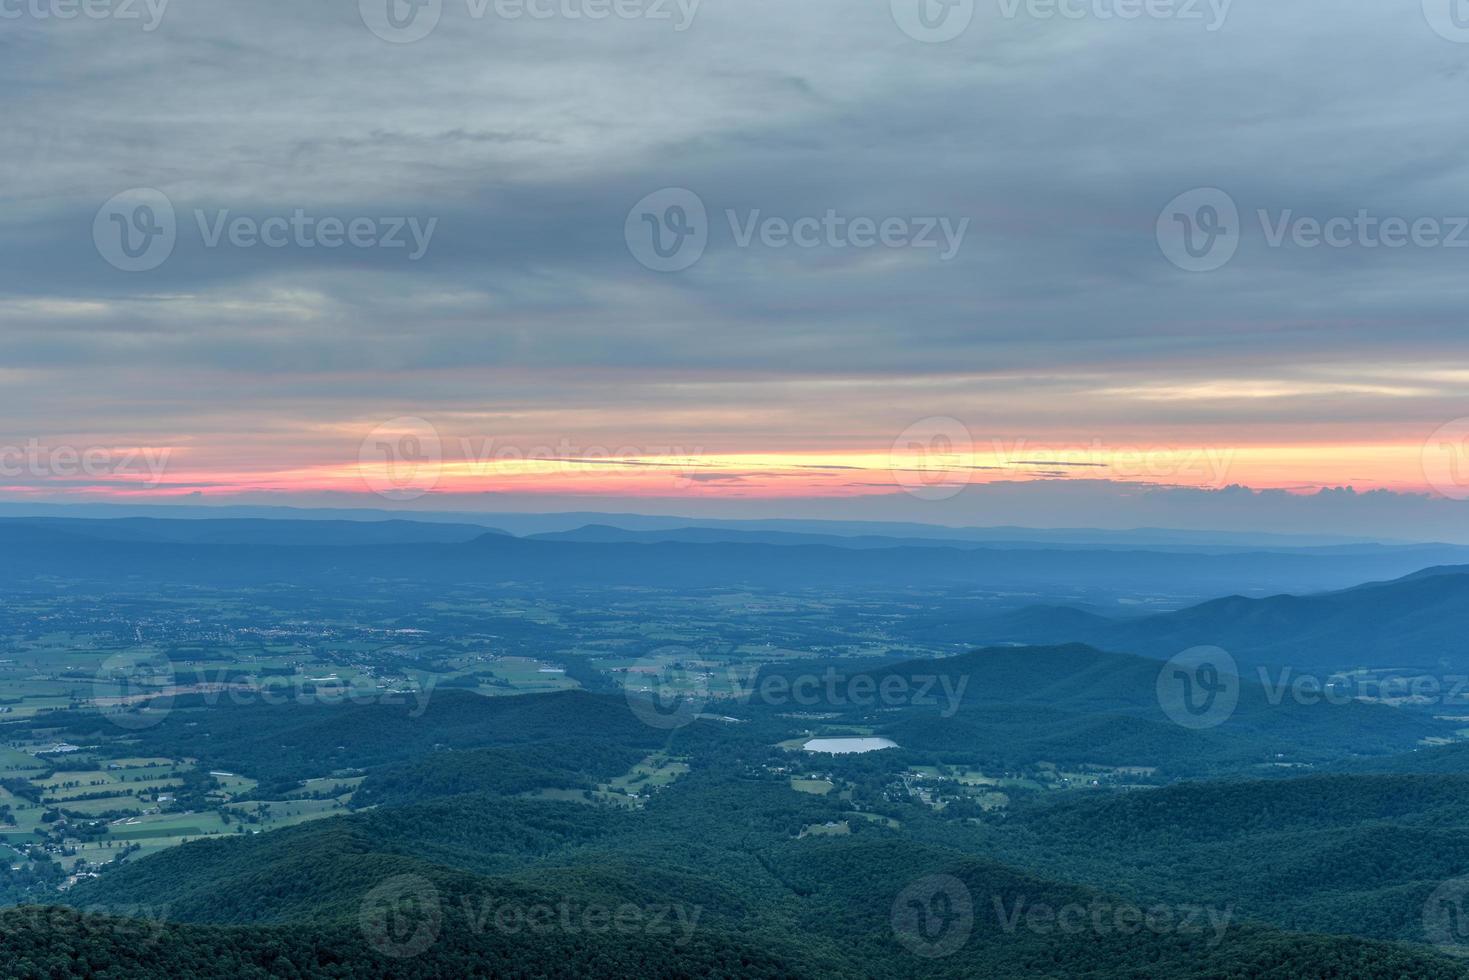 Sonnenuntergang entlang des Shenandoah-Tals und der Blue Ridge Mountains aus dem Shenandoah-Nationalpark, Virginia foto